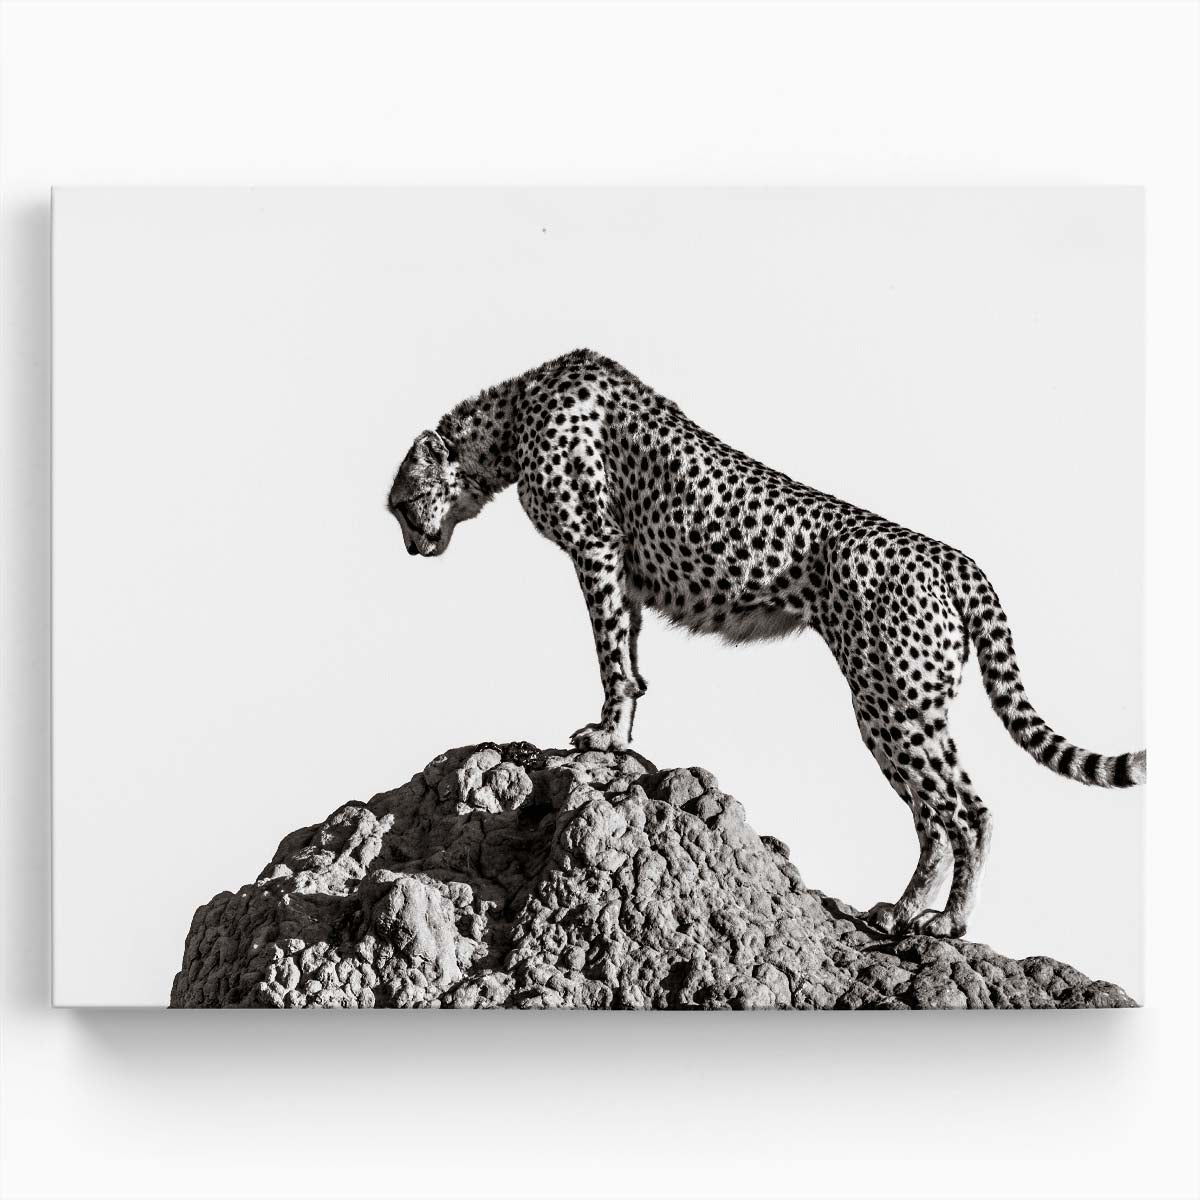 Monochrome Leopard Profile - Masai Mara Wildlife Photography Wall Art by Luxuriance Designs. Made in USA.